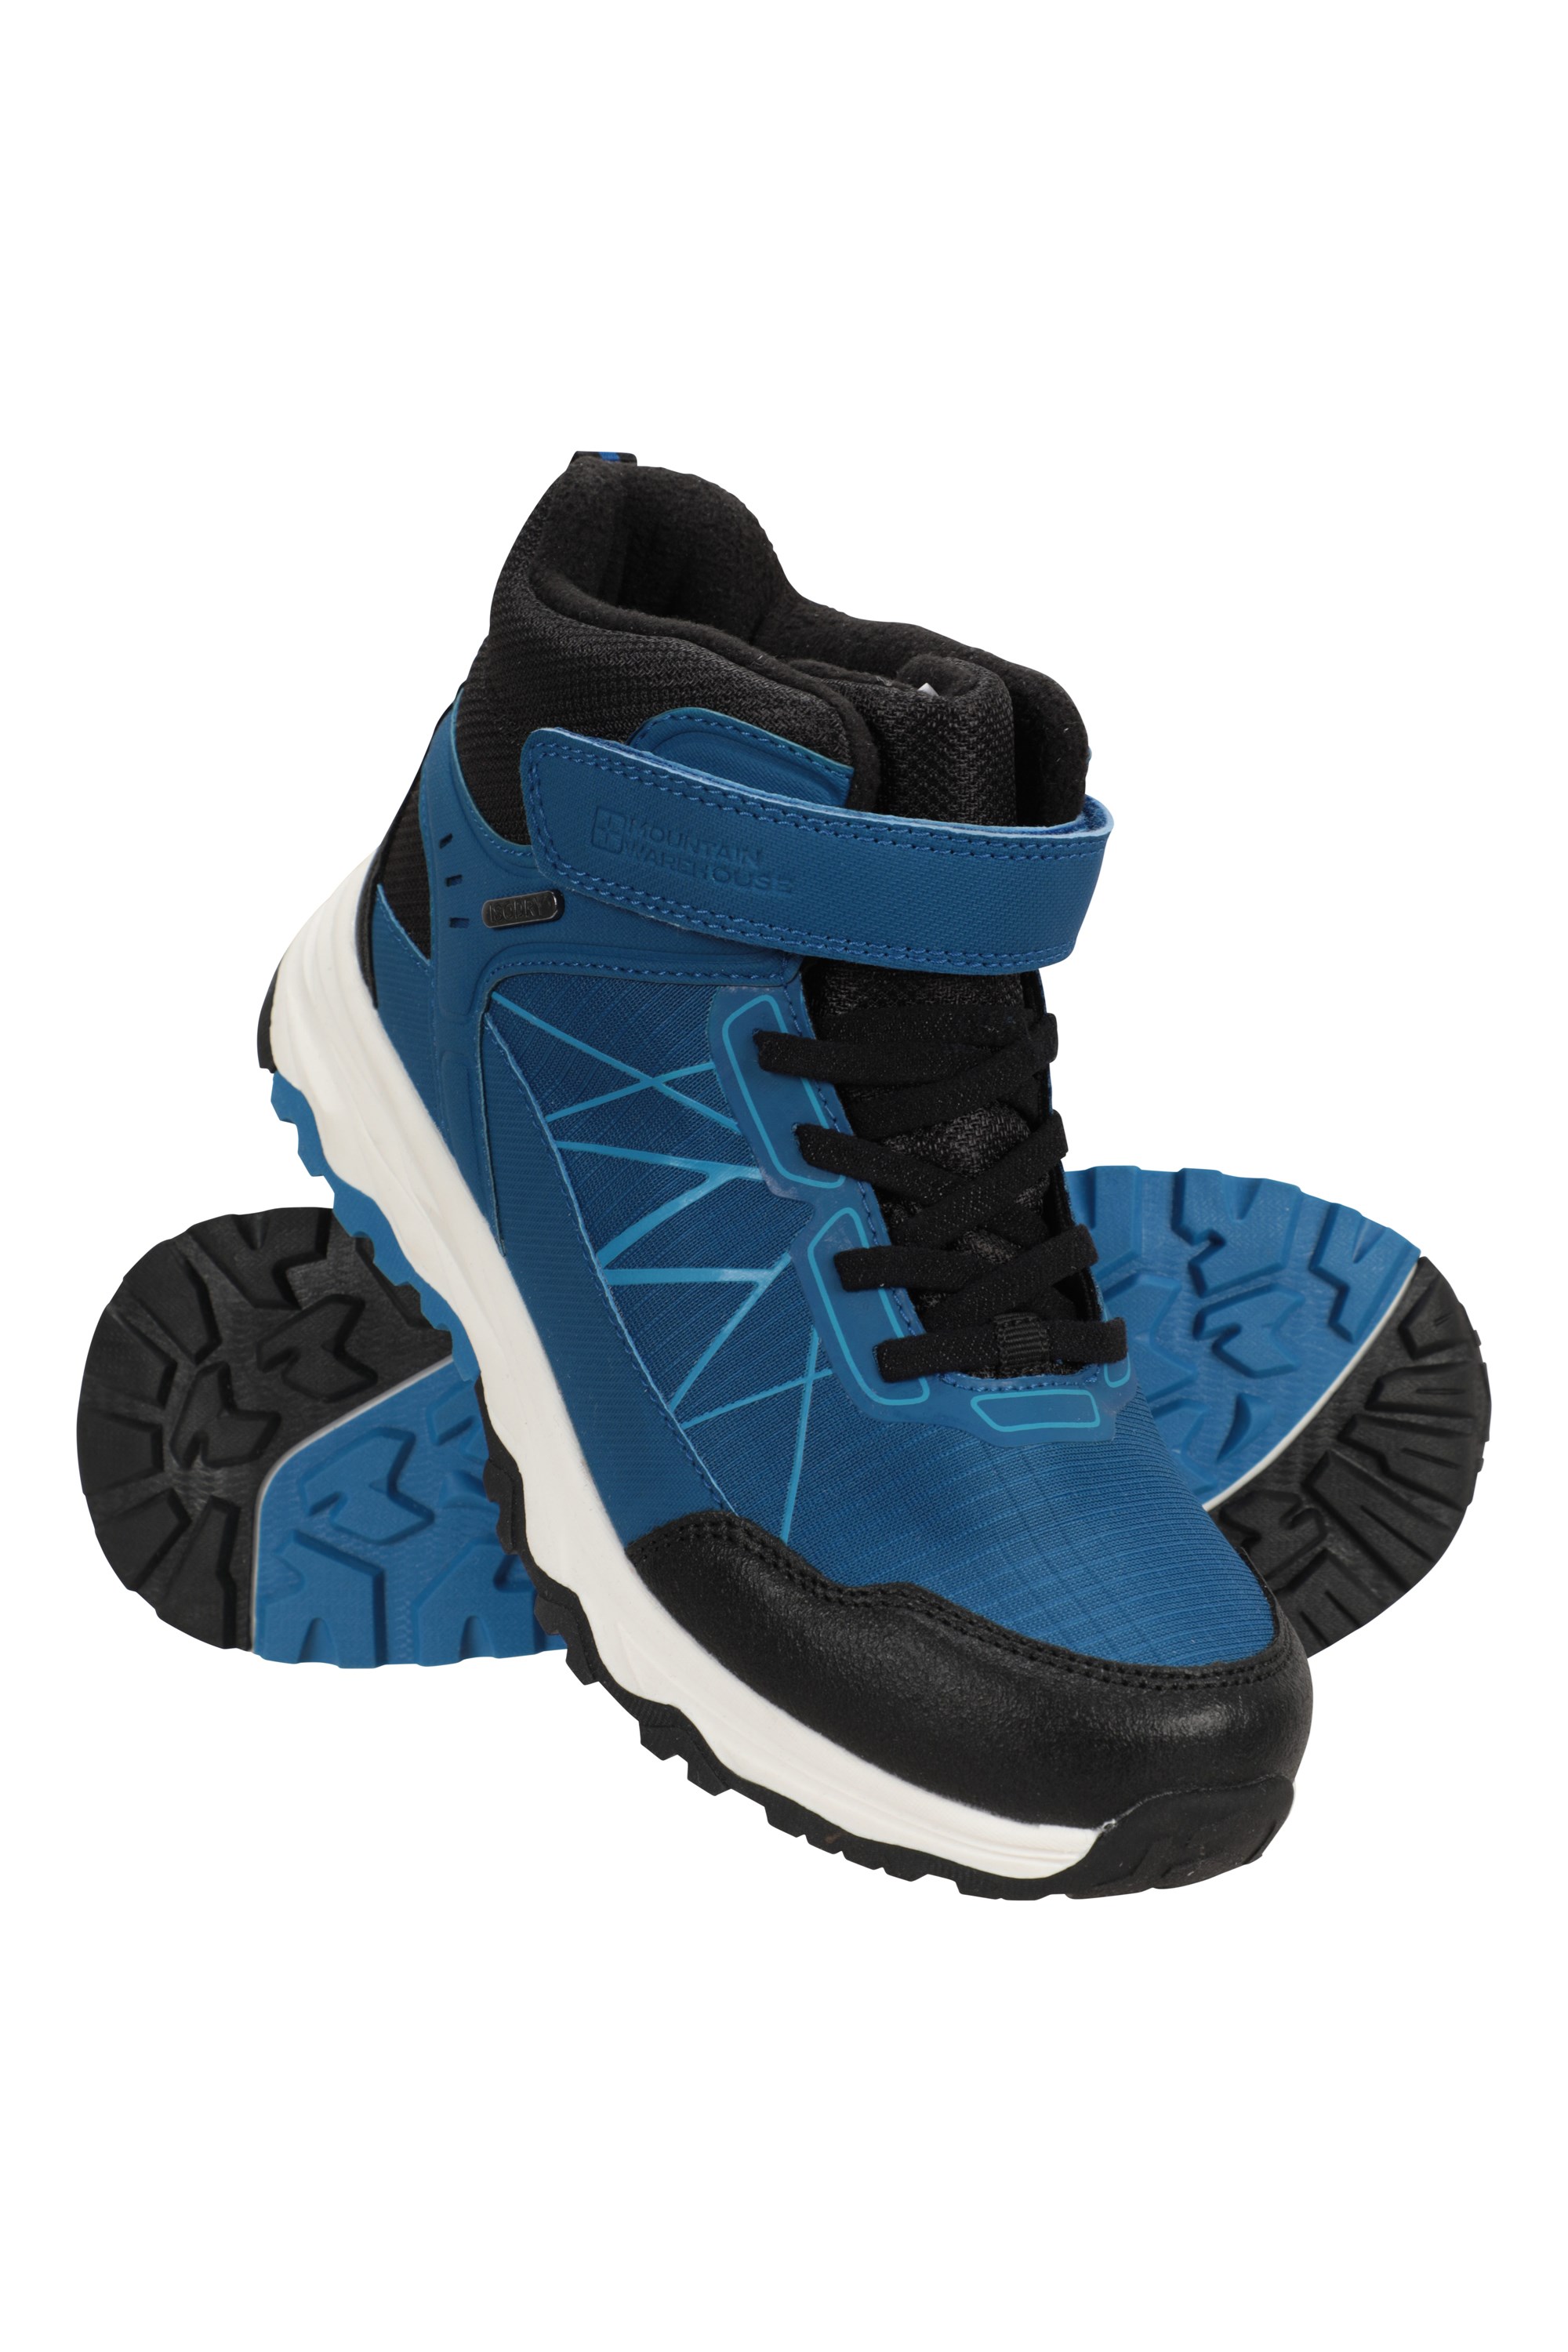 Saturn Kids Thermal Walking Boots - Blue